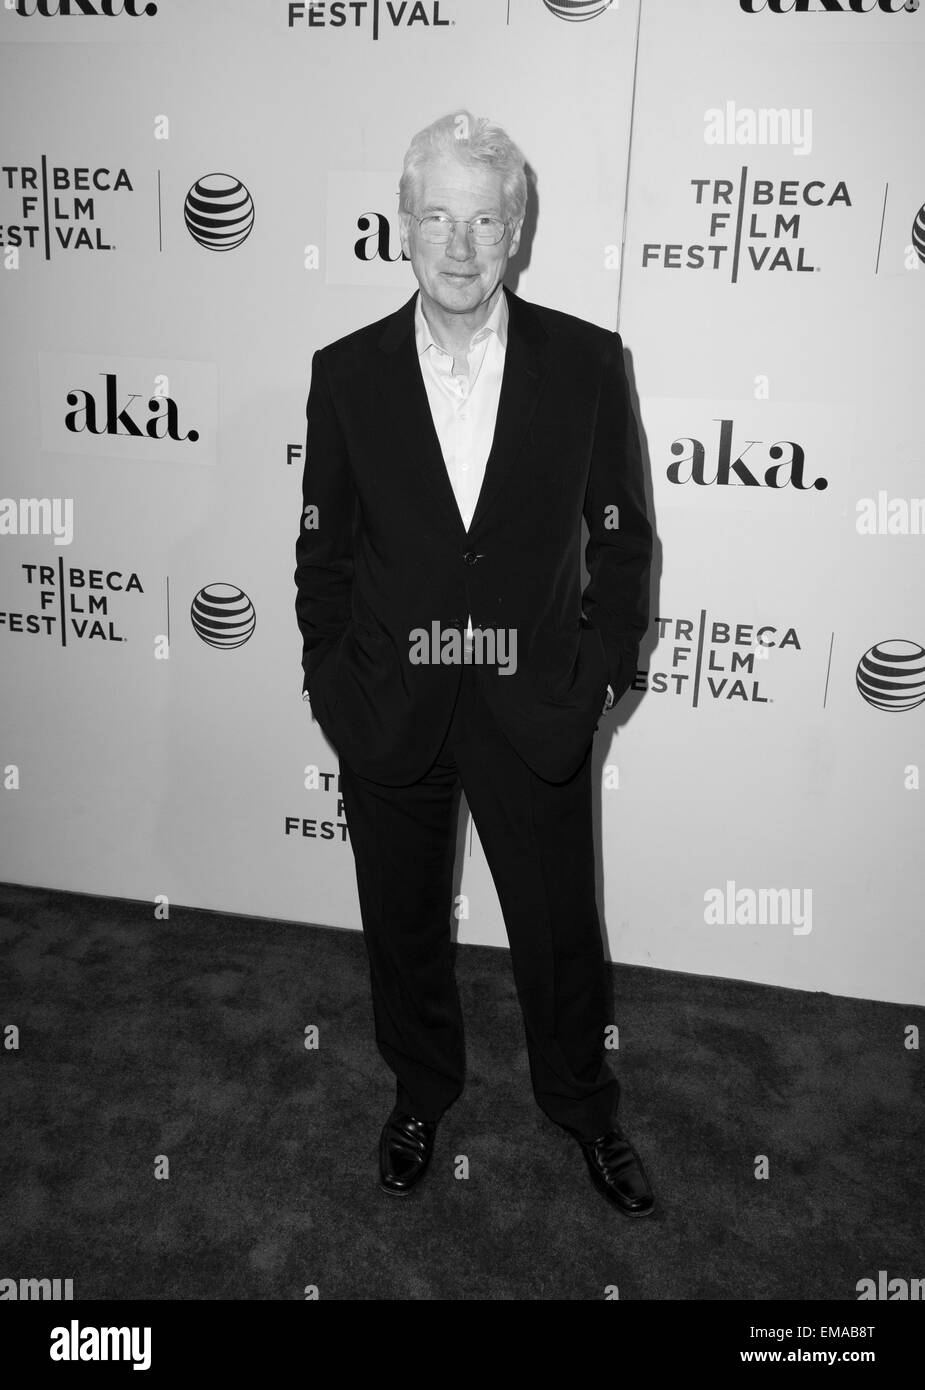 New York, NY - Abril 17, 2015: Richard Gere asiste a Festival de Cine de Tribeca estreno de Franny film at BMCC Tribeca Performing Arts Center Foto de stock